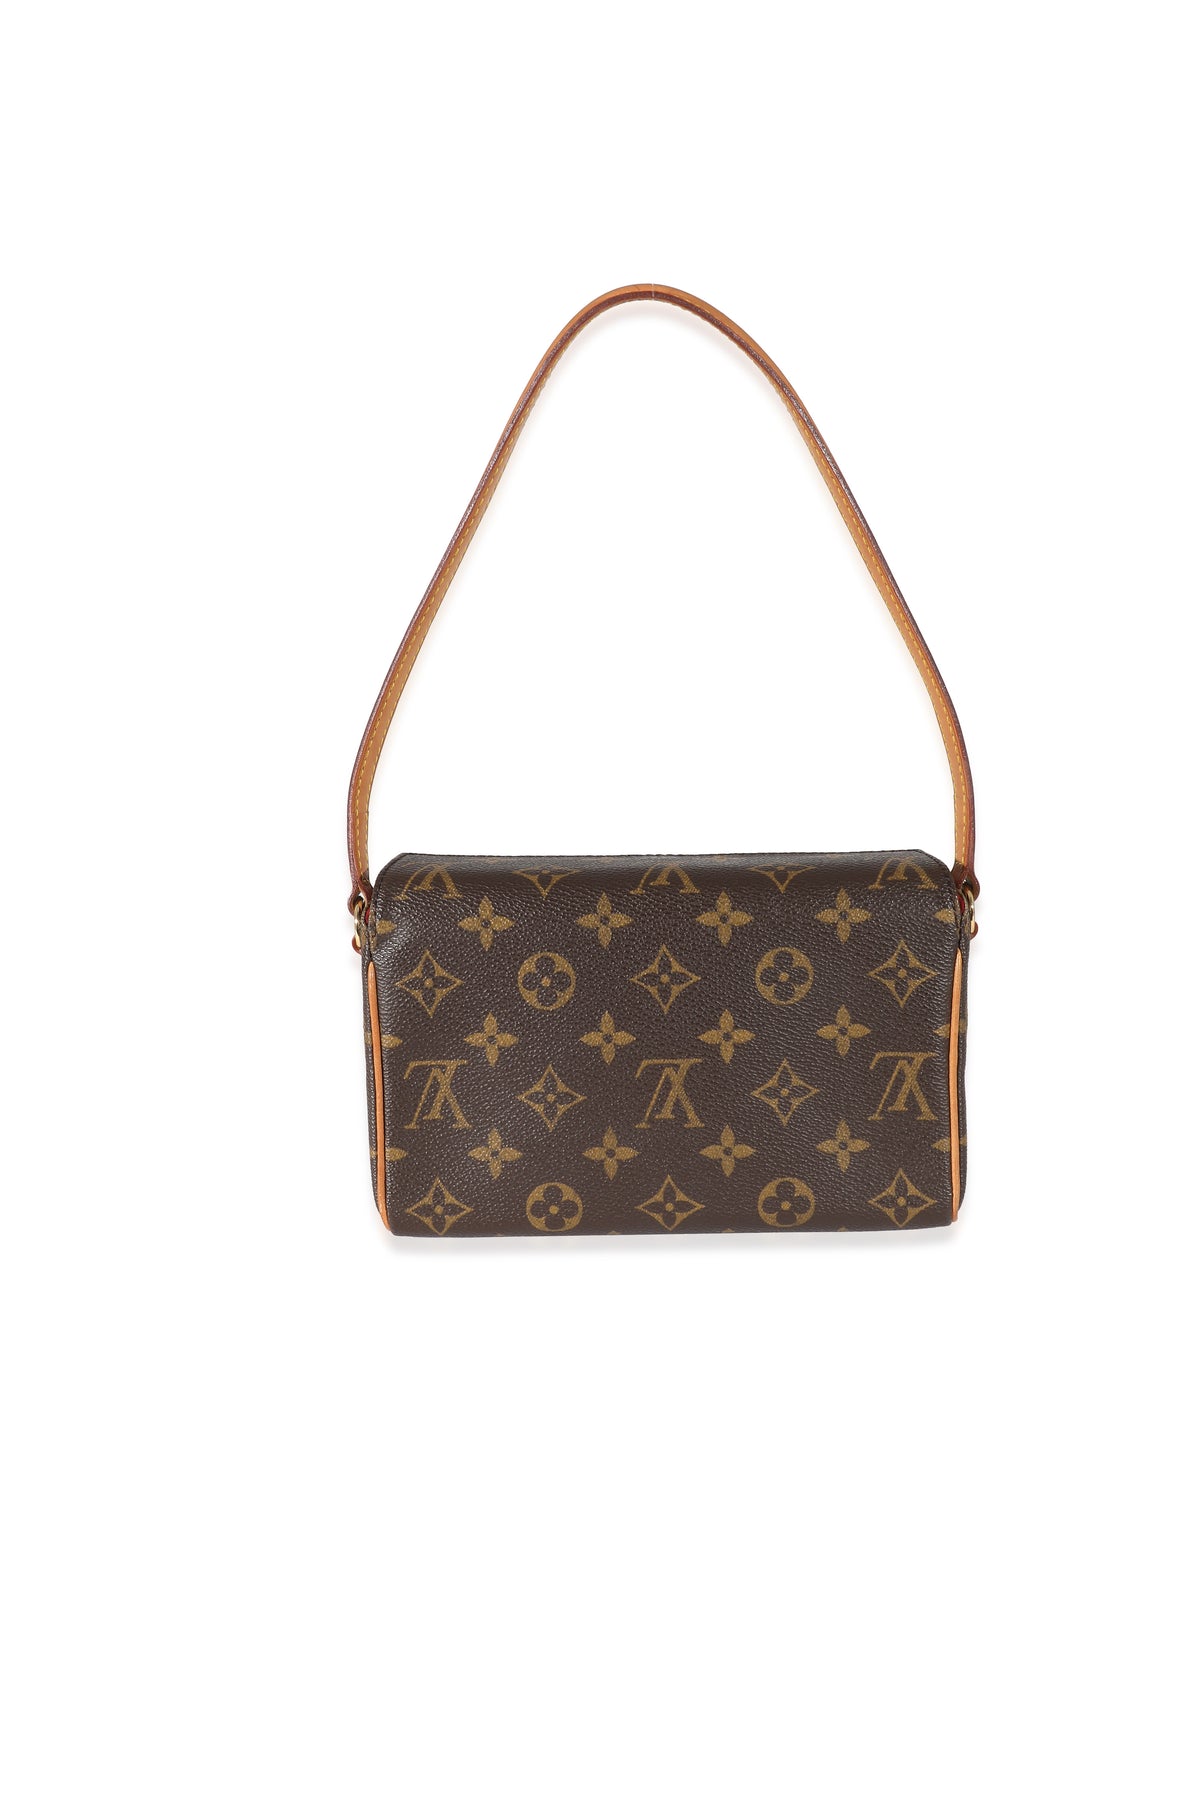 Louis Vuitton Recital Monogram Canvas Handbag Shoulder Bag